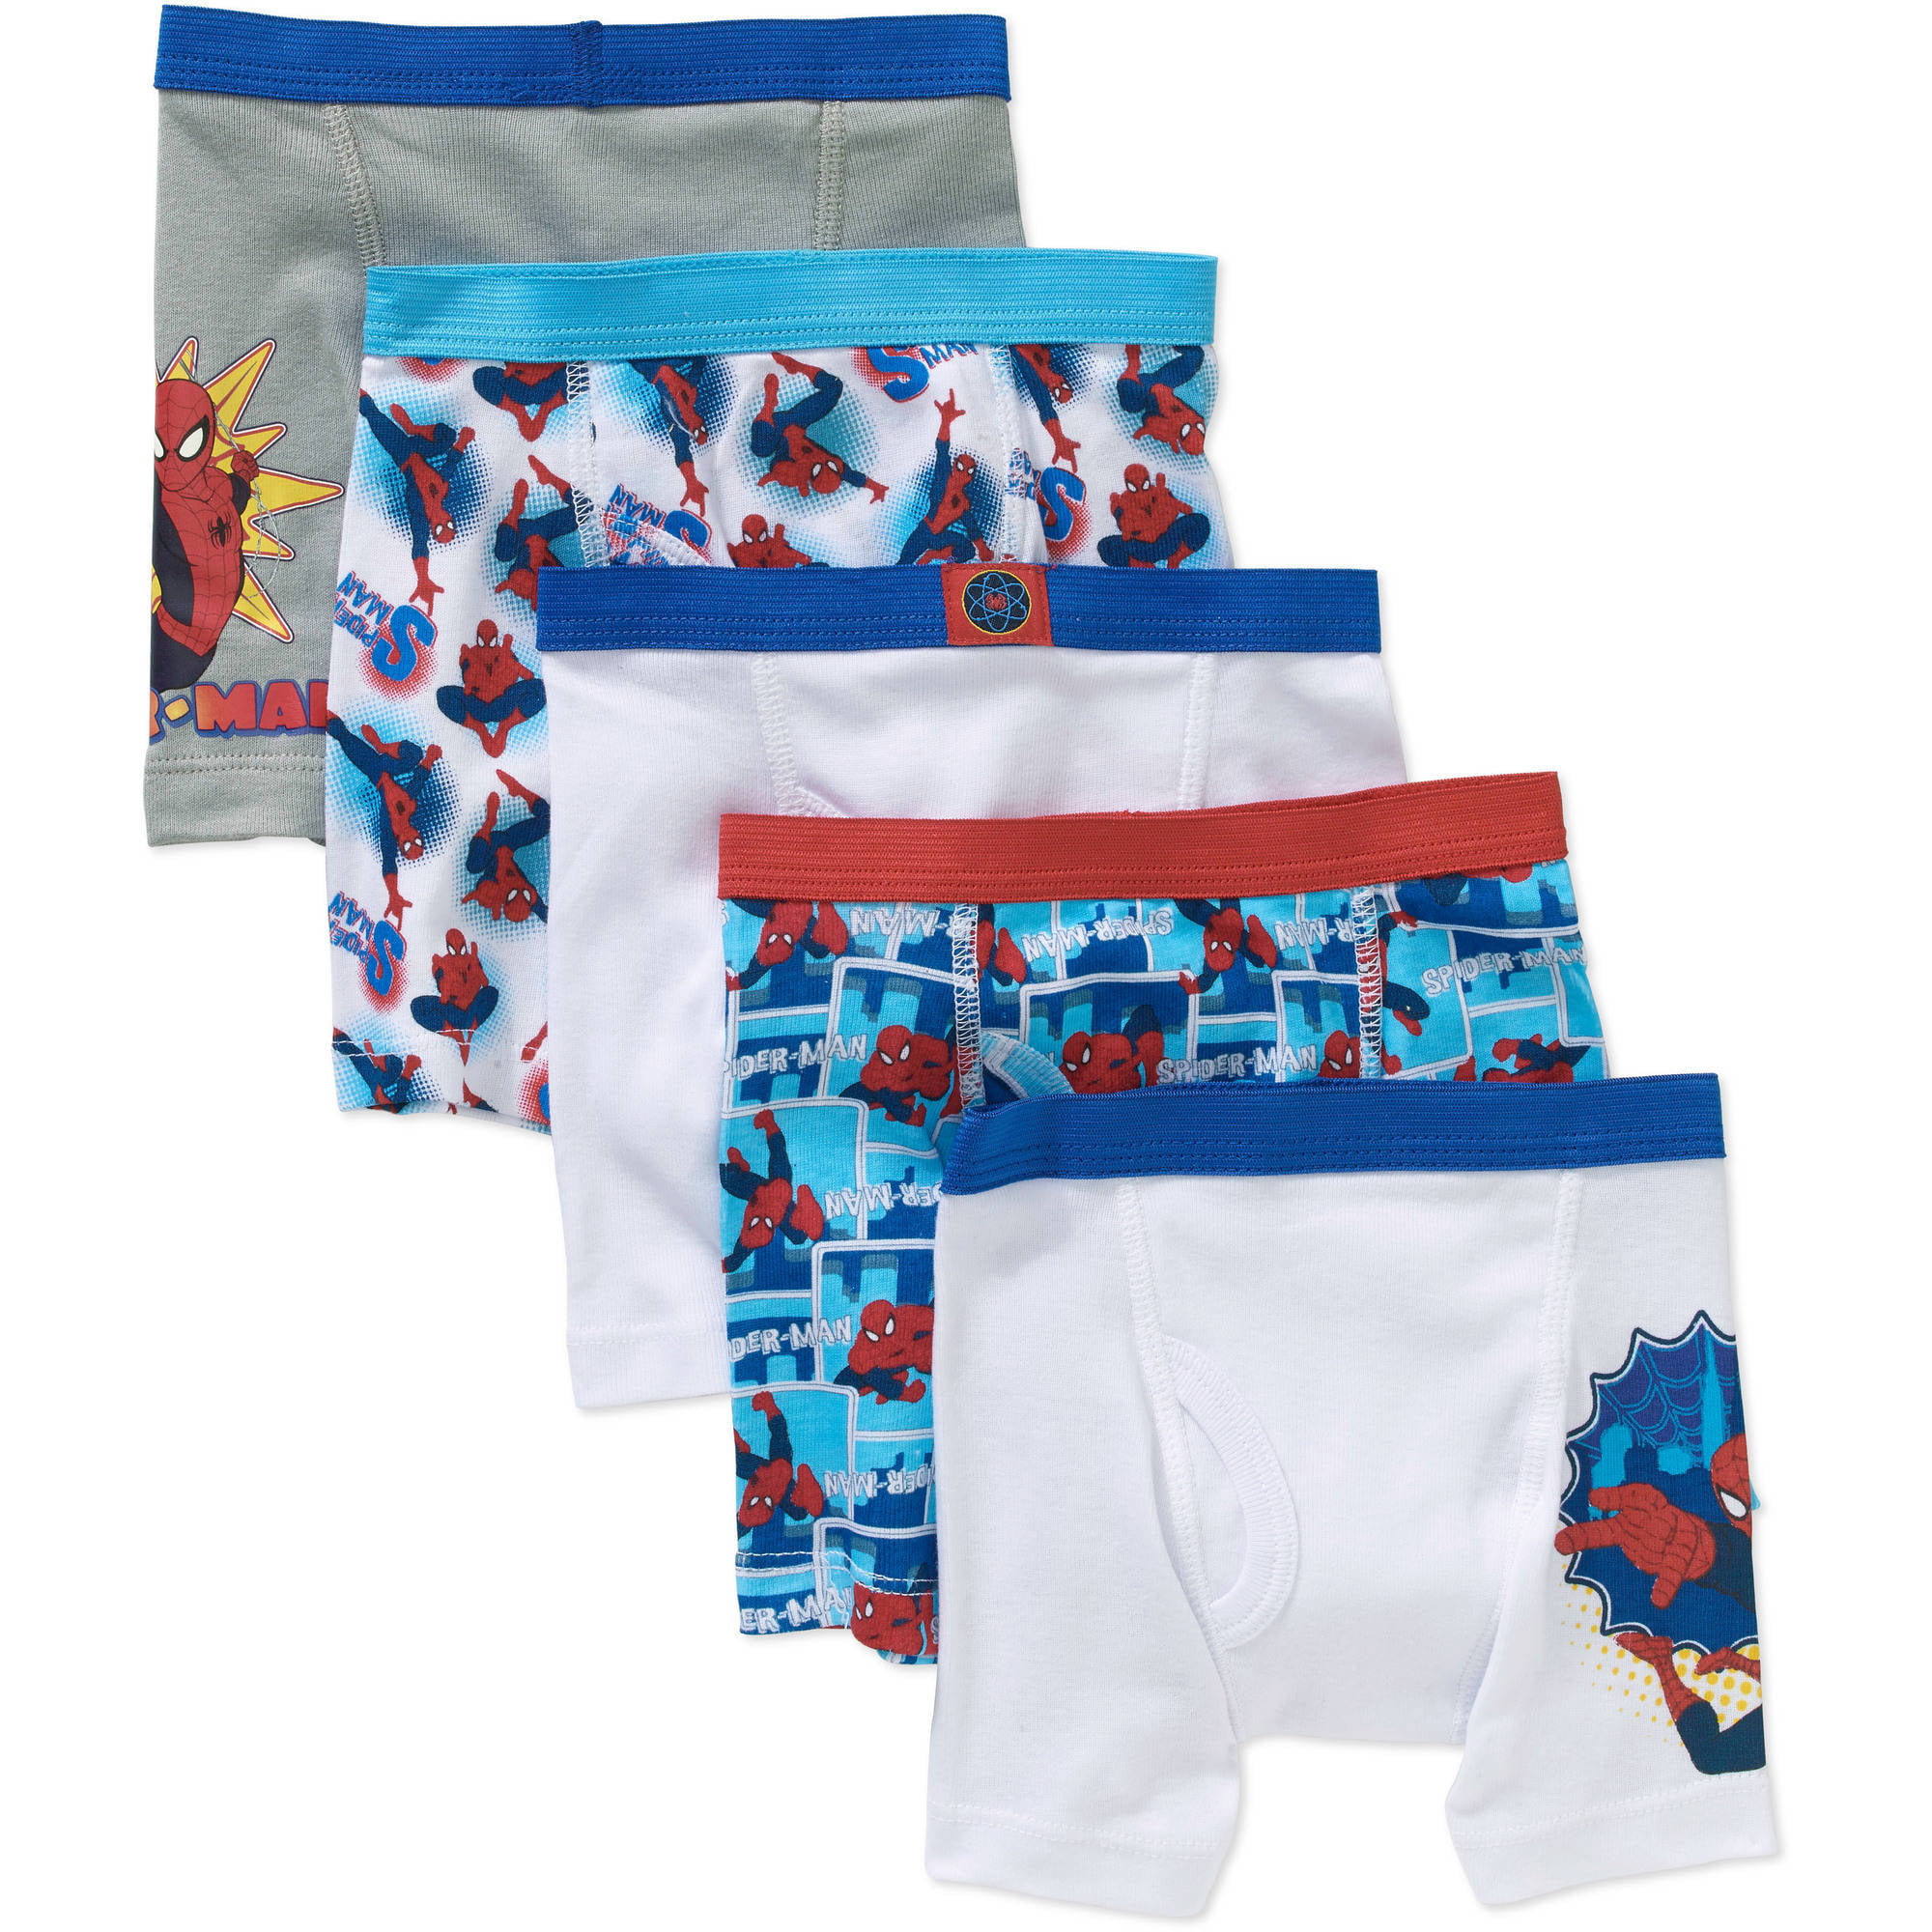 Handcraft Marvel Comics Ultimate Spiderman 5 Pack Boys Boxer Briefs Underwear for boys